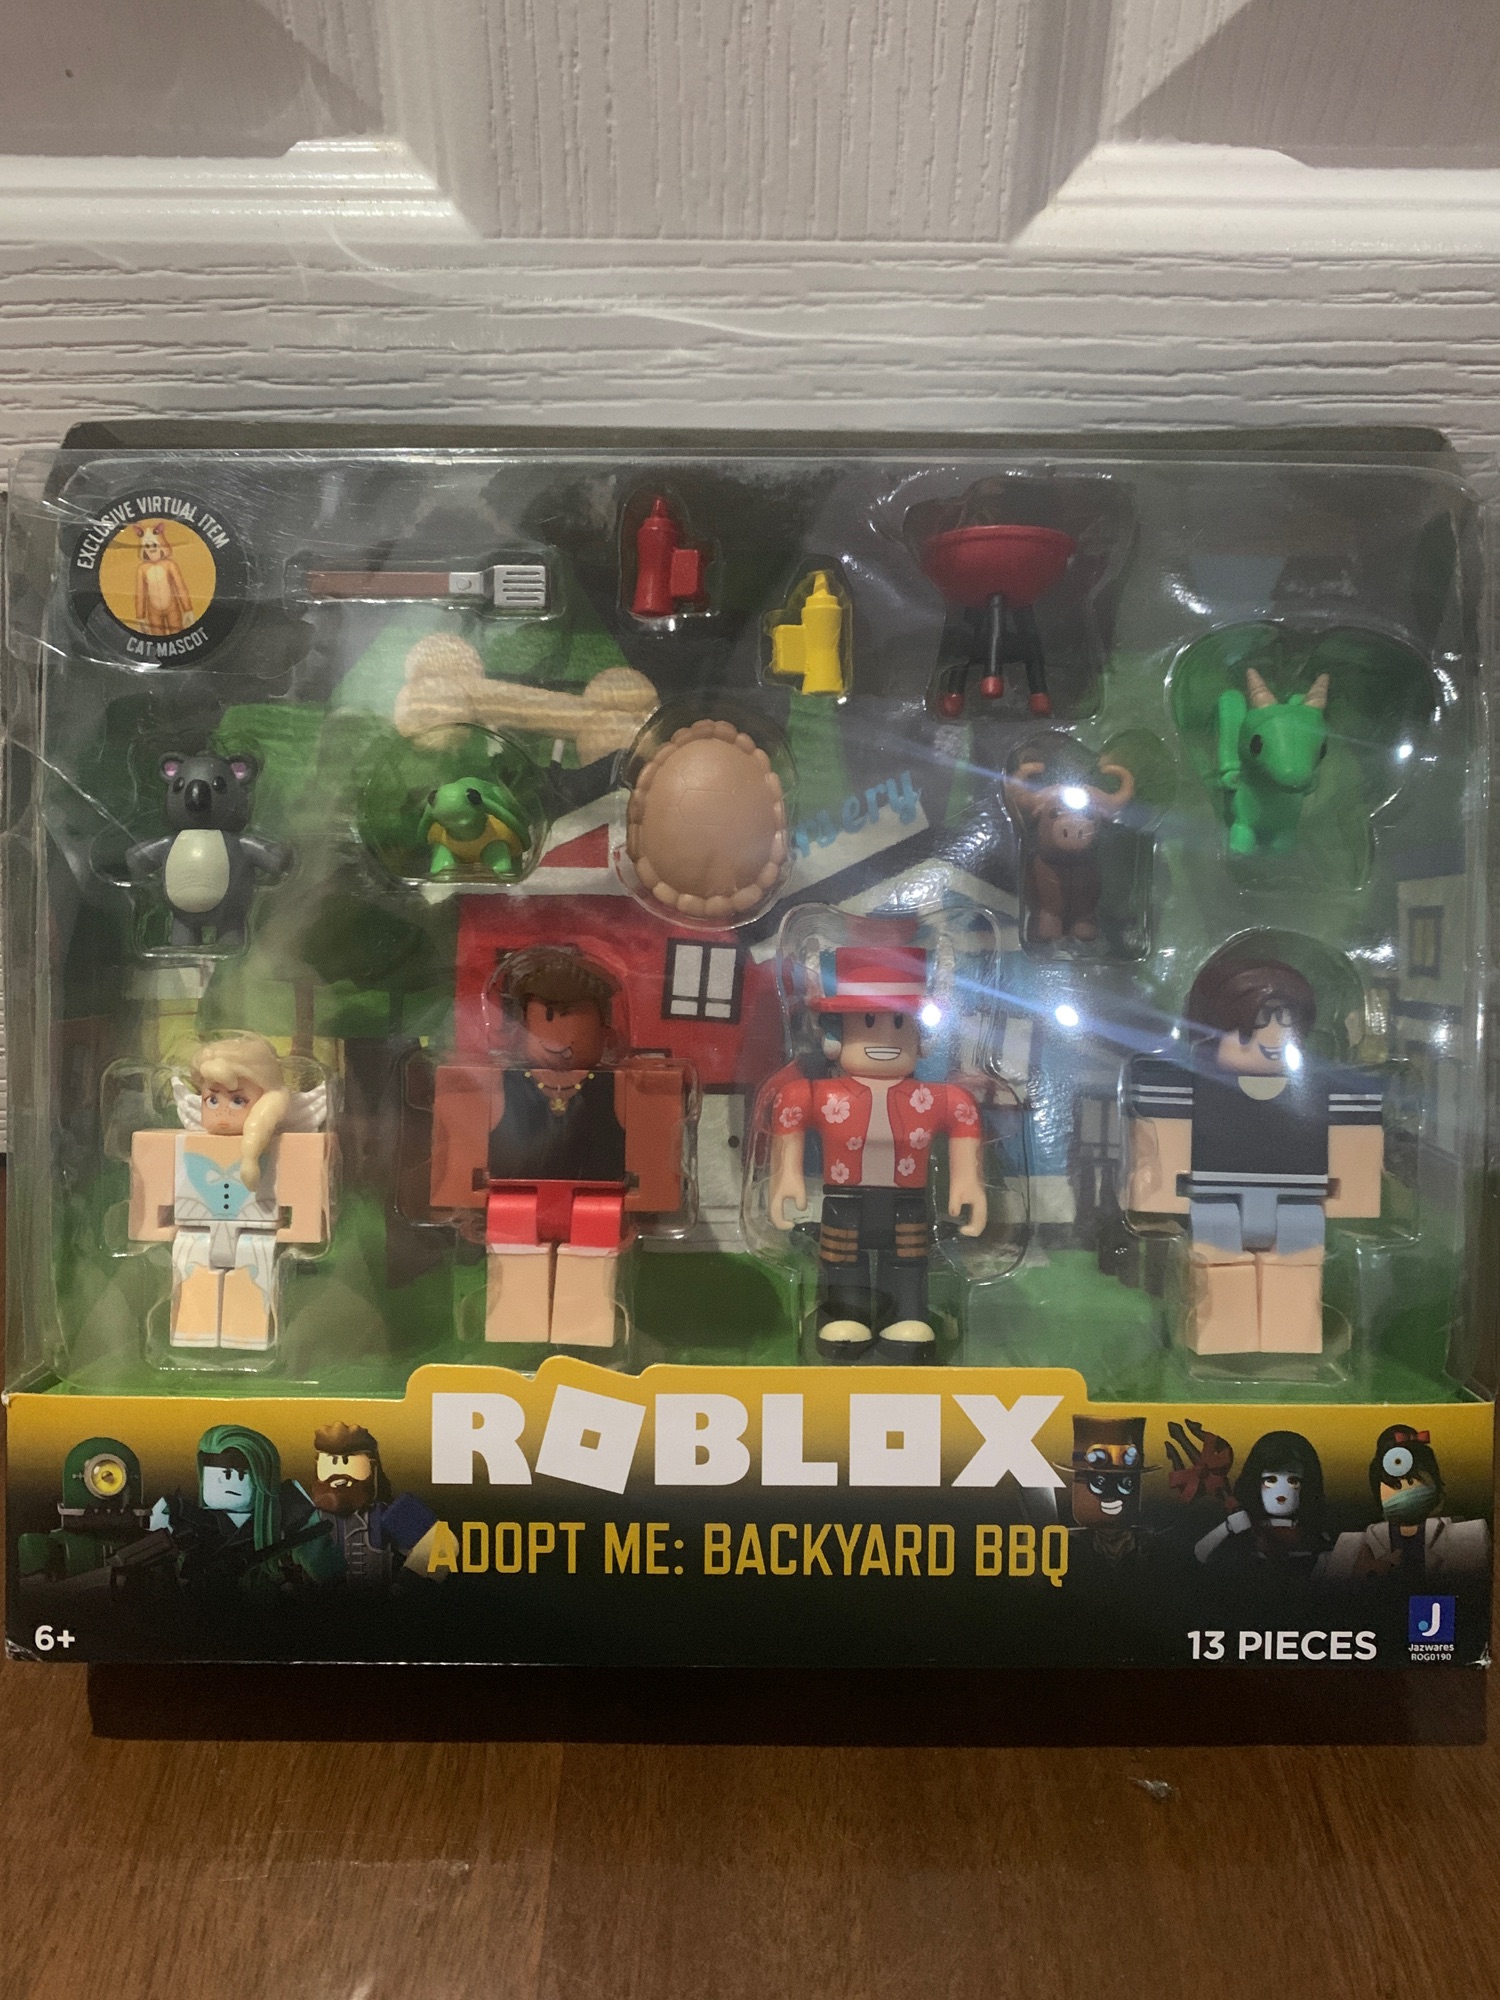 Roblox Adopt Me Backyard BBQ Playset